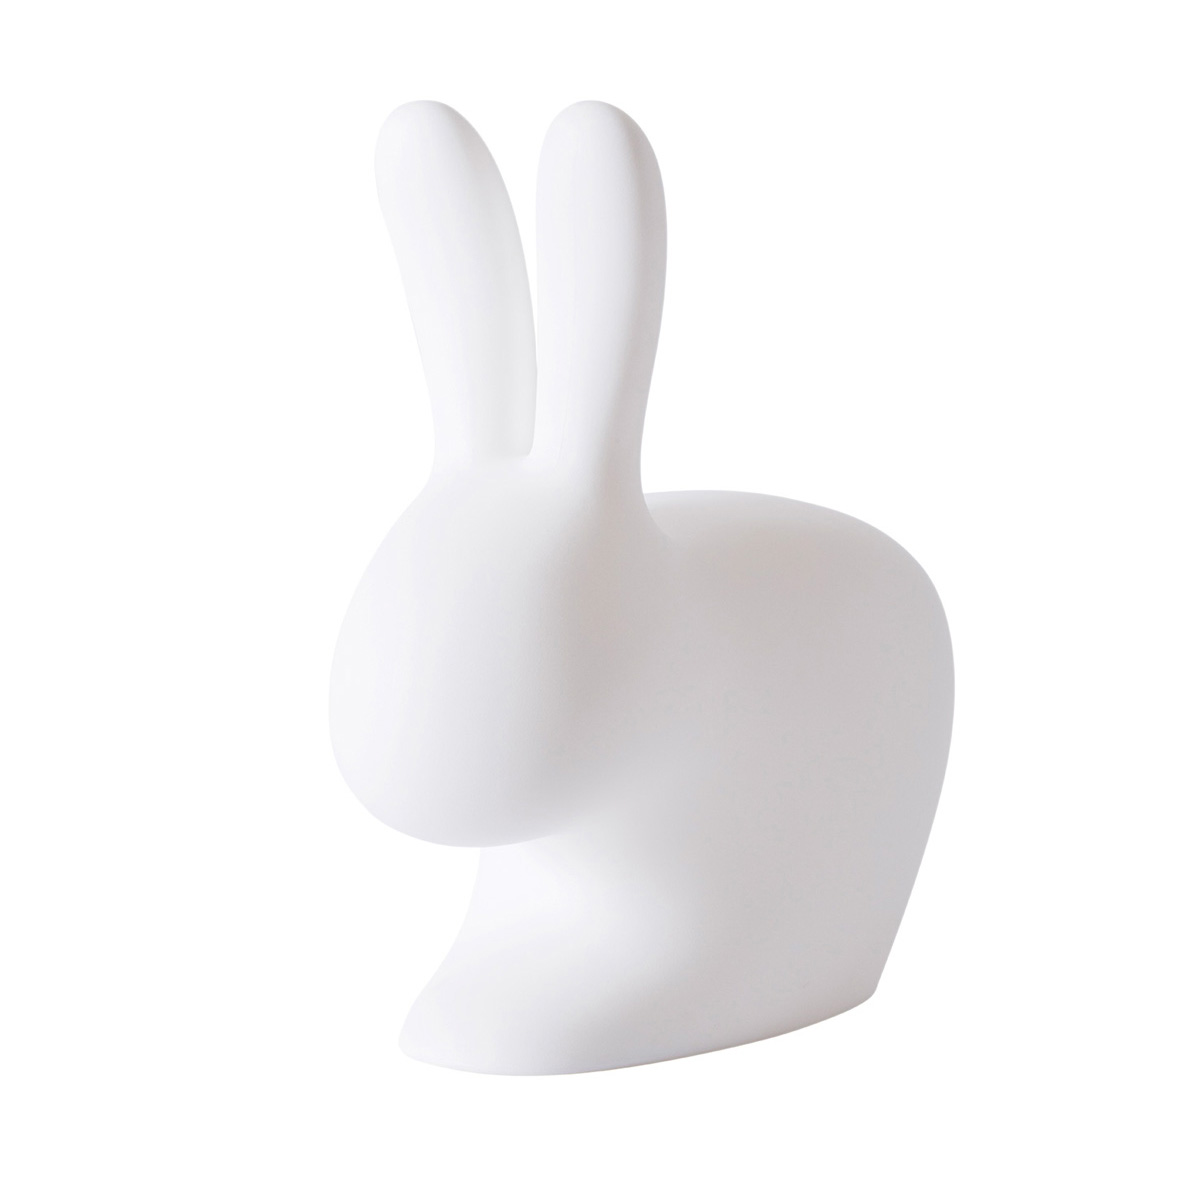 Rabbit/Bunny Style 4 Acrylic Clock Black or white face options